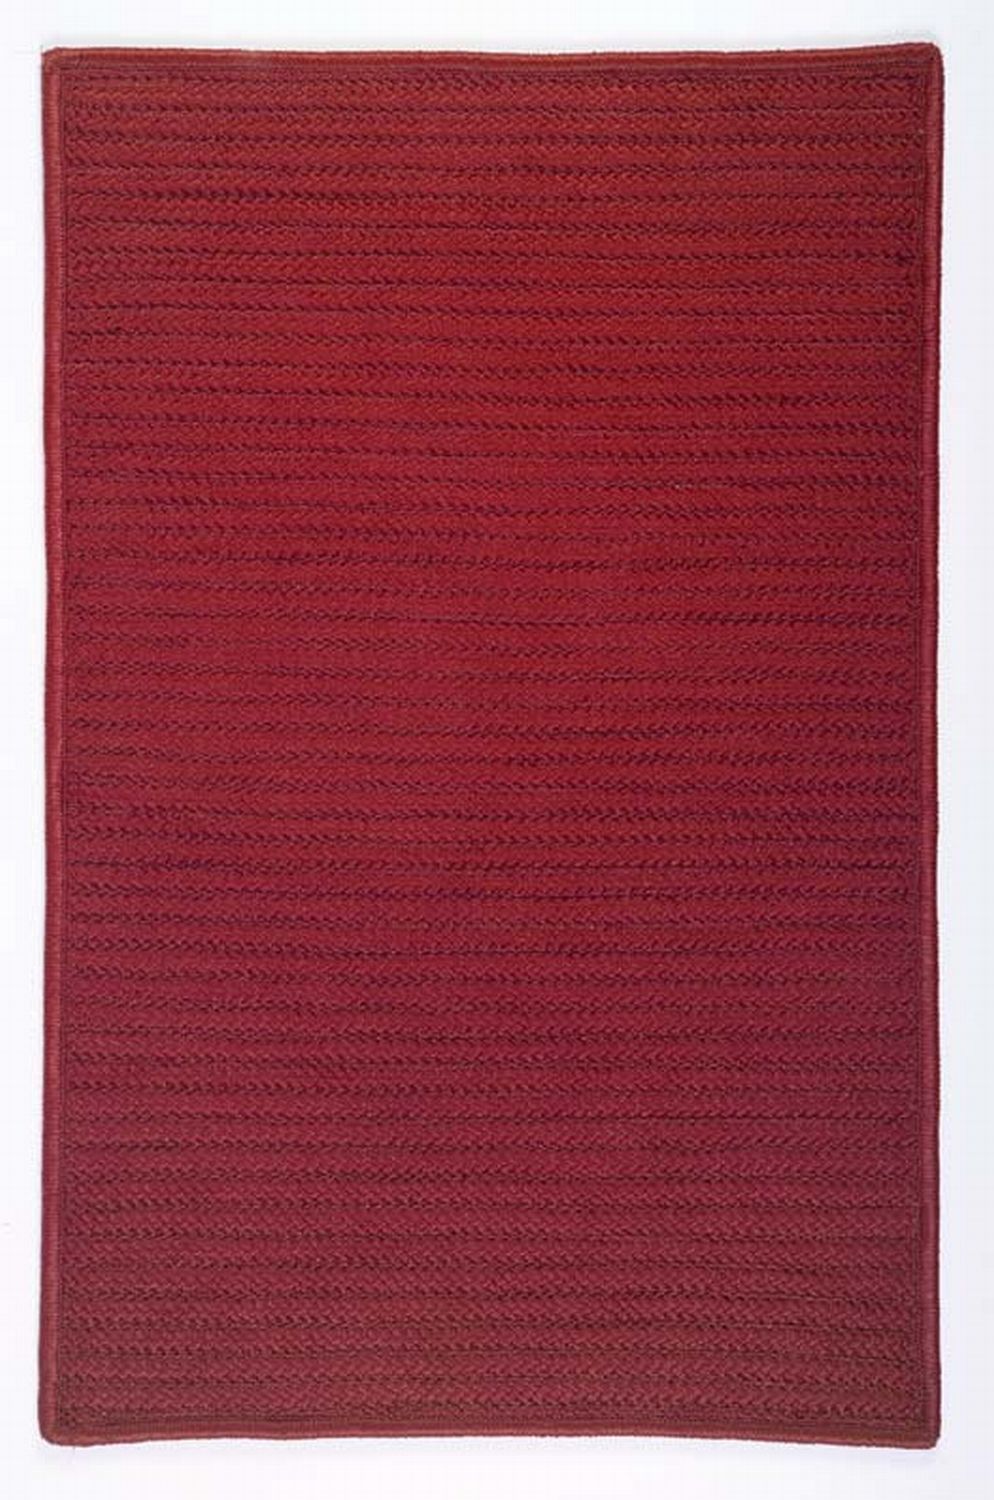 Indoor Outdoor Premium Braided Rug Solid Easy Clean Carpet Red in 18